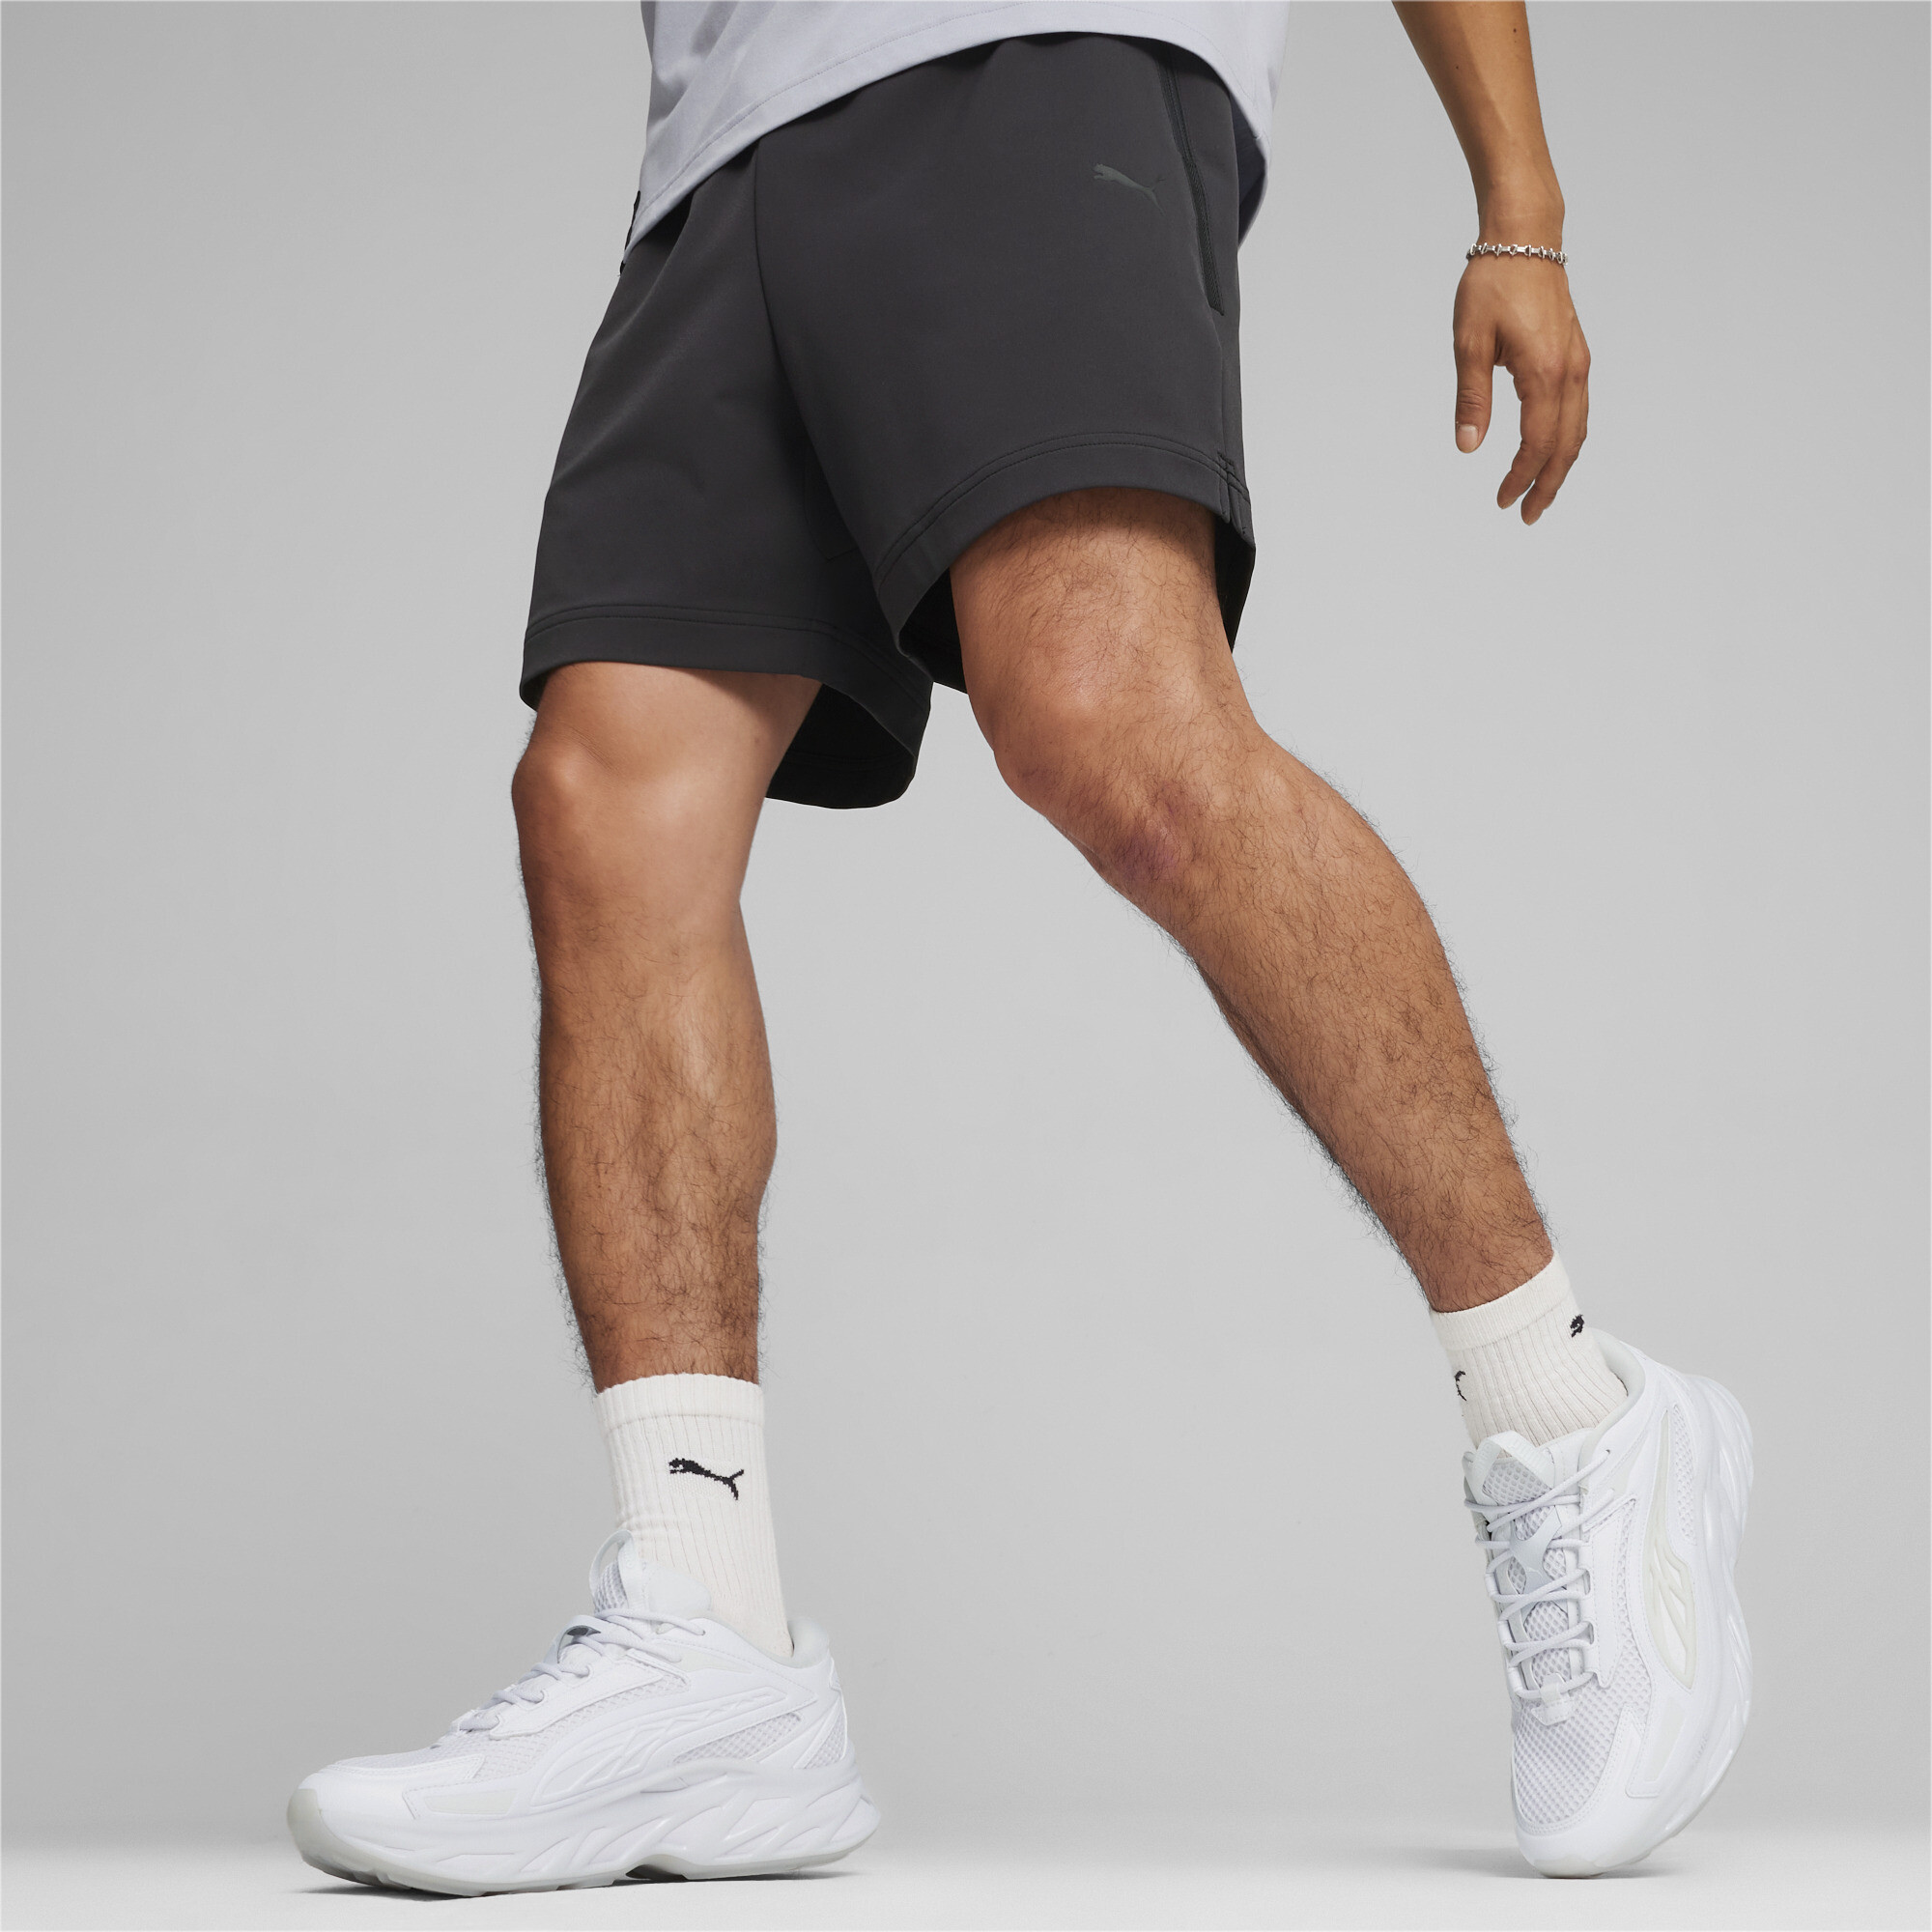 Men's PUMATECH Shorts In 10 - Black, Size Large